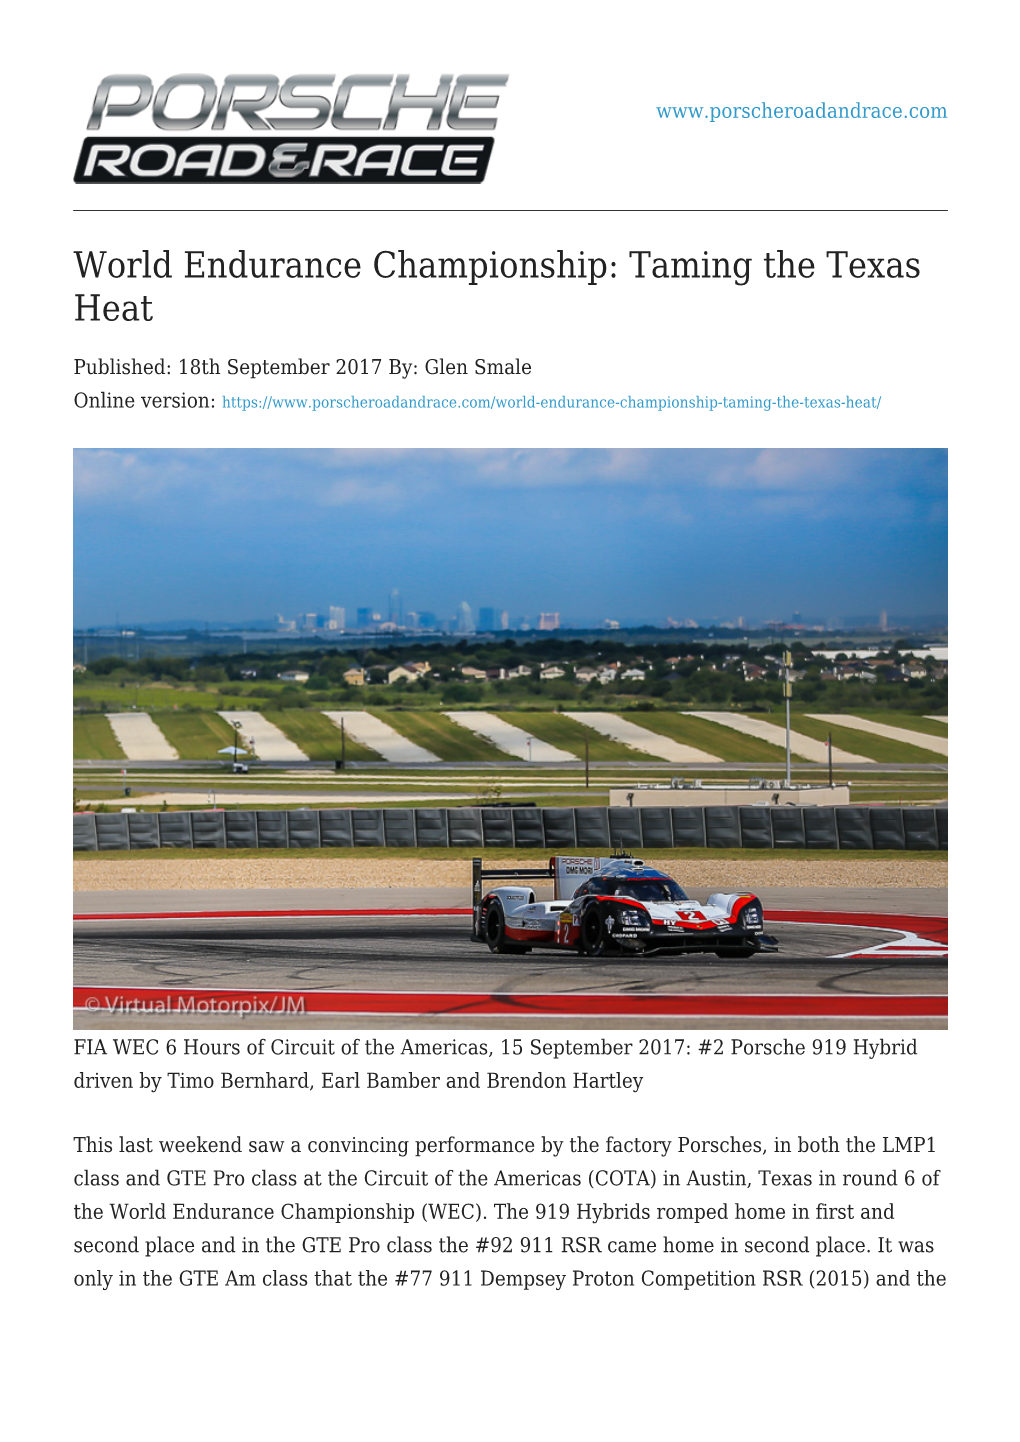 World Endurance Championship: Taming the Texas Heat